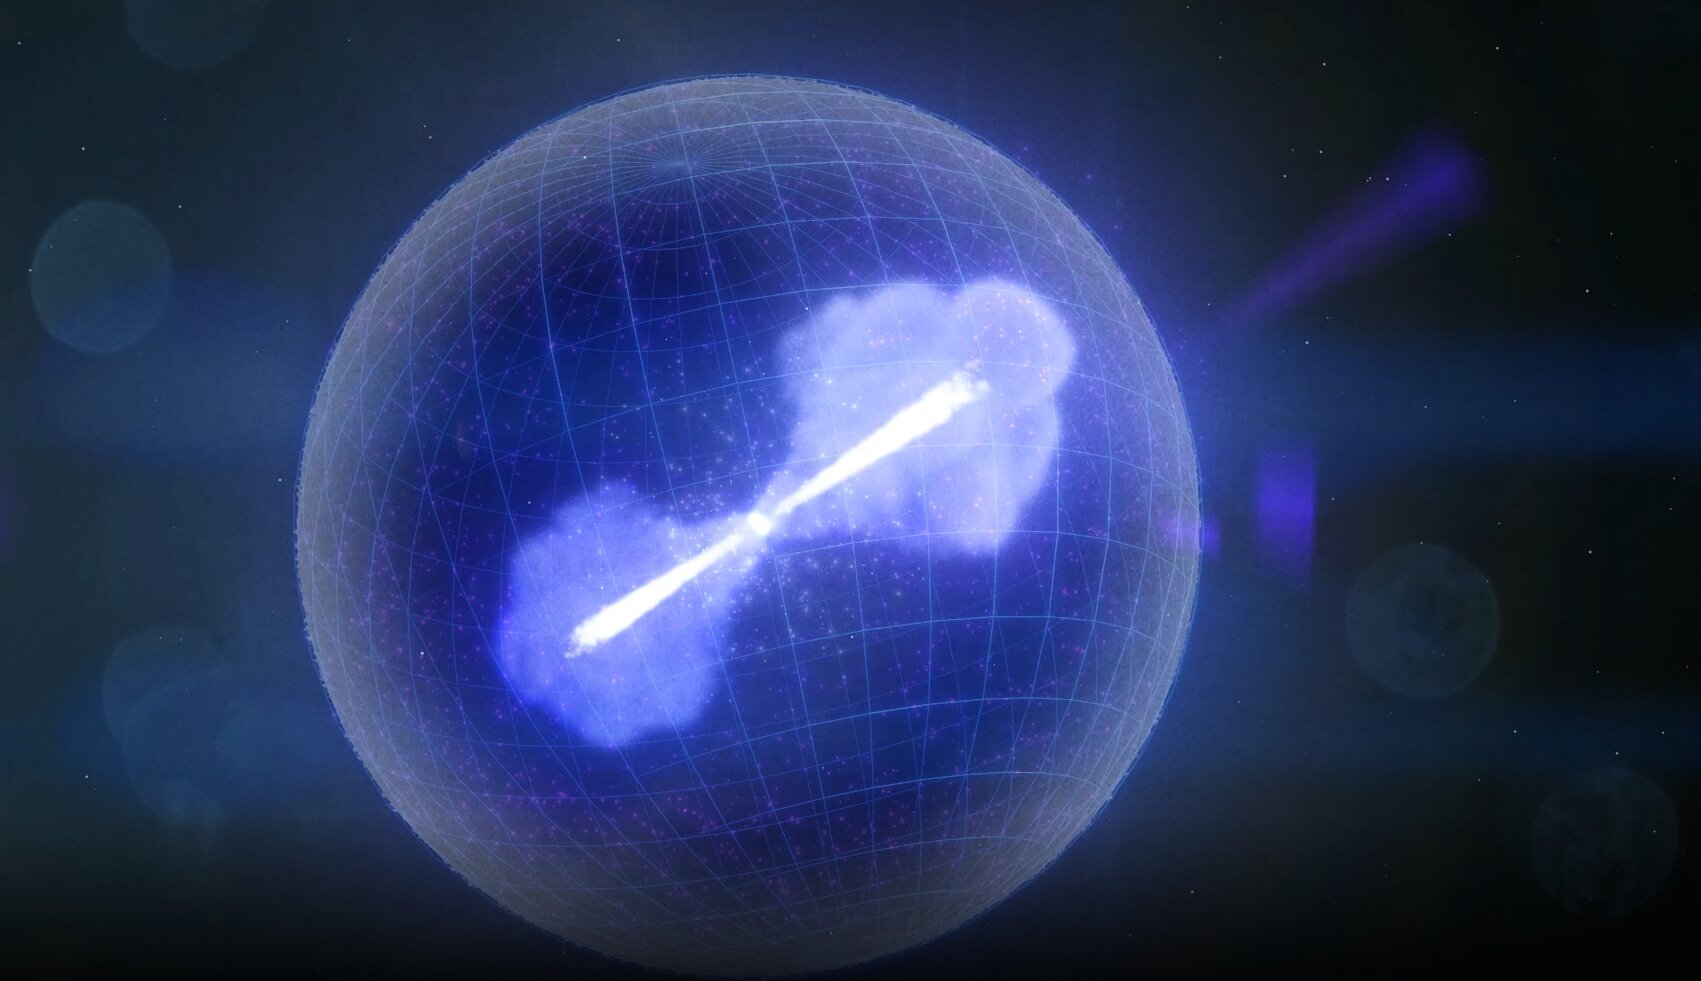 Fermi spots a supernova's 'fizzled' gamma-ray burst